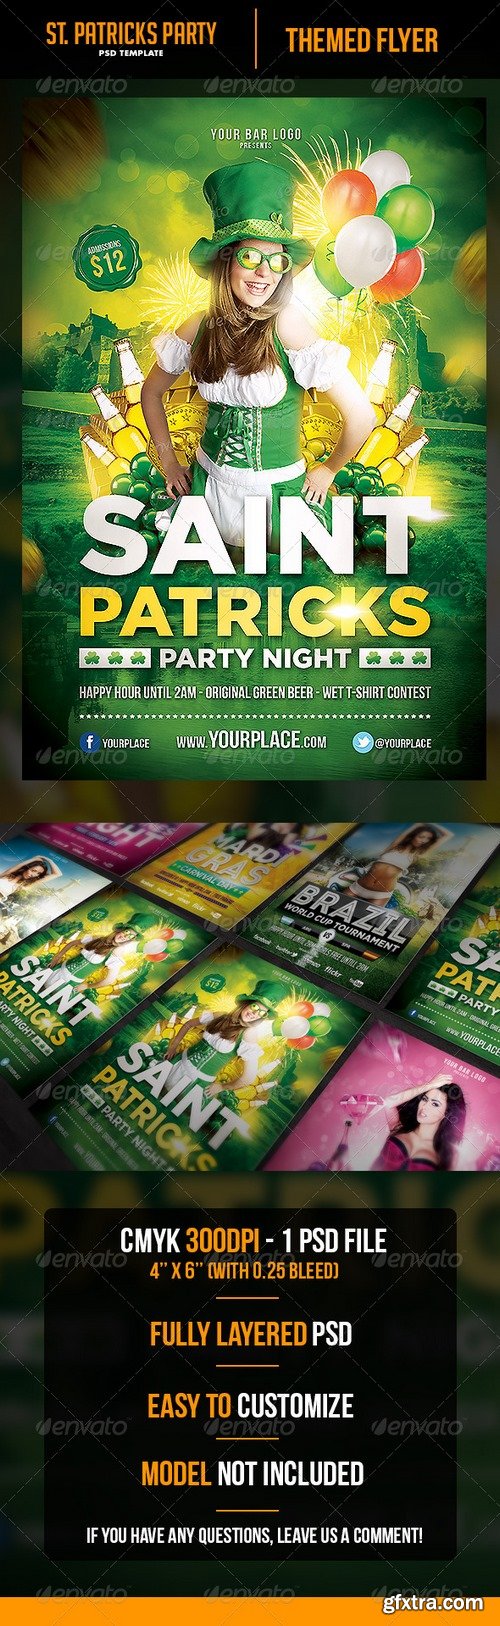 Graphicriver - Saint Patricks Party Night Flyer Template 6761383